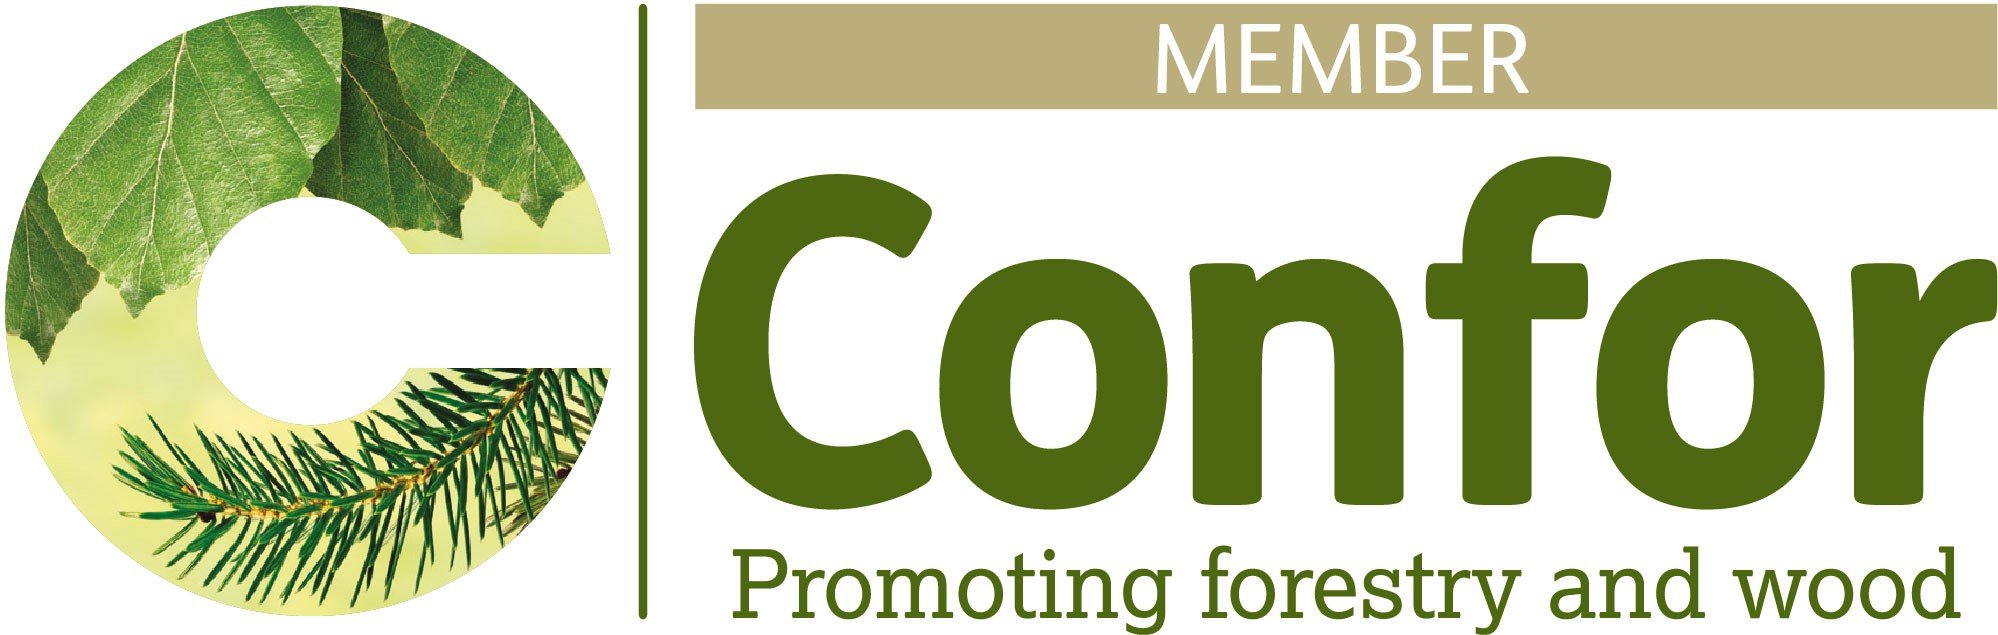 confor-members-logo-final.jpg